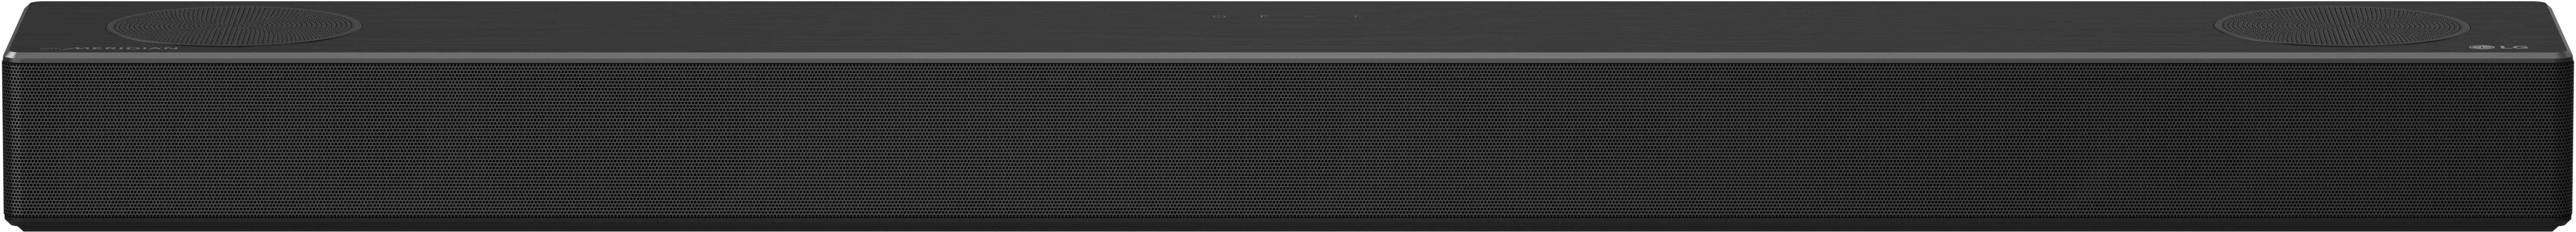 LG DSN7CY, Black Soundbar